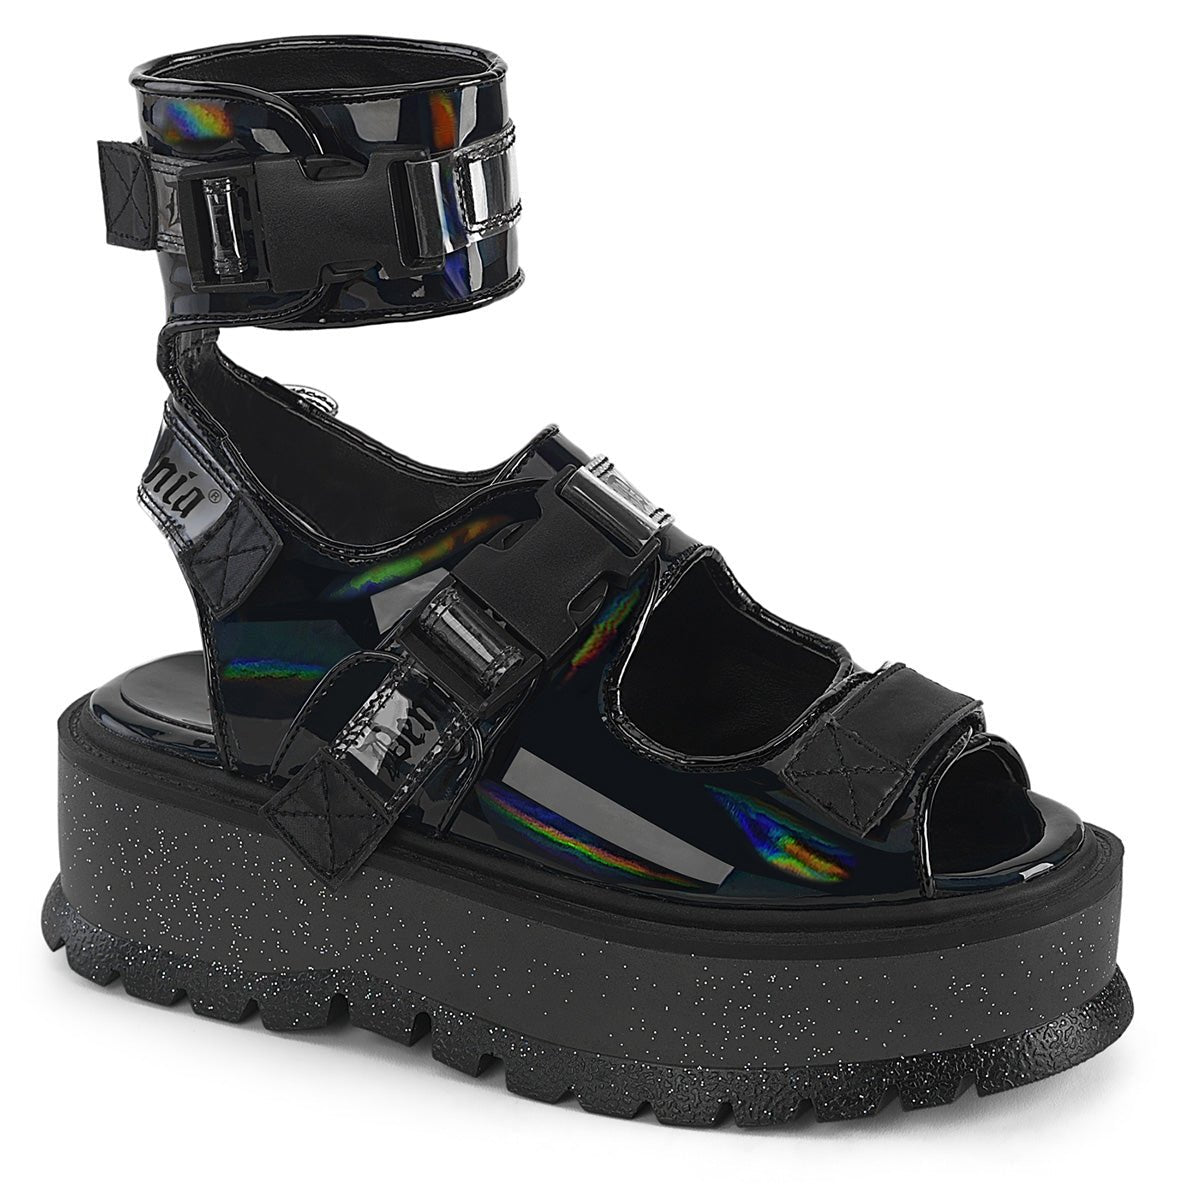 Too Fast | Demonia Slacker 15 B | Black Holographic Patent Leather Women's Sandals